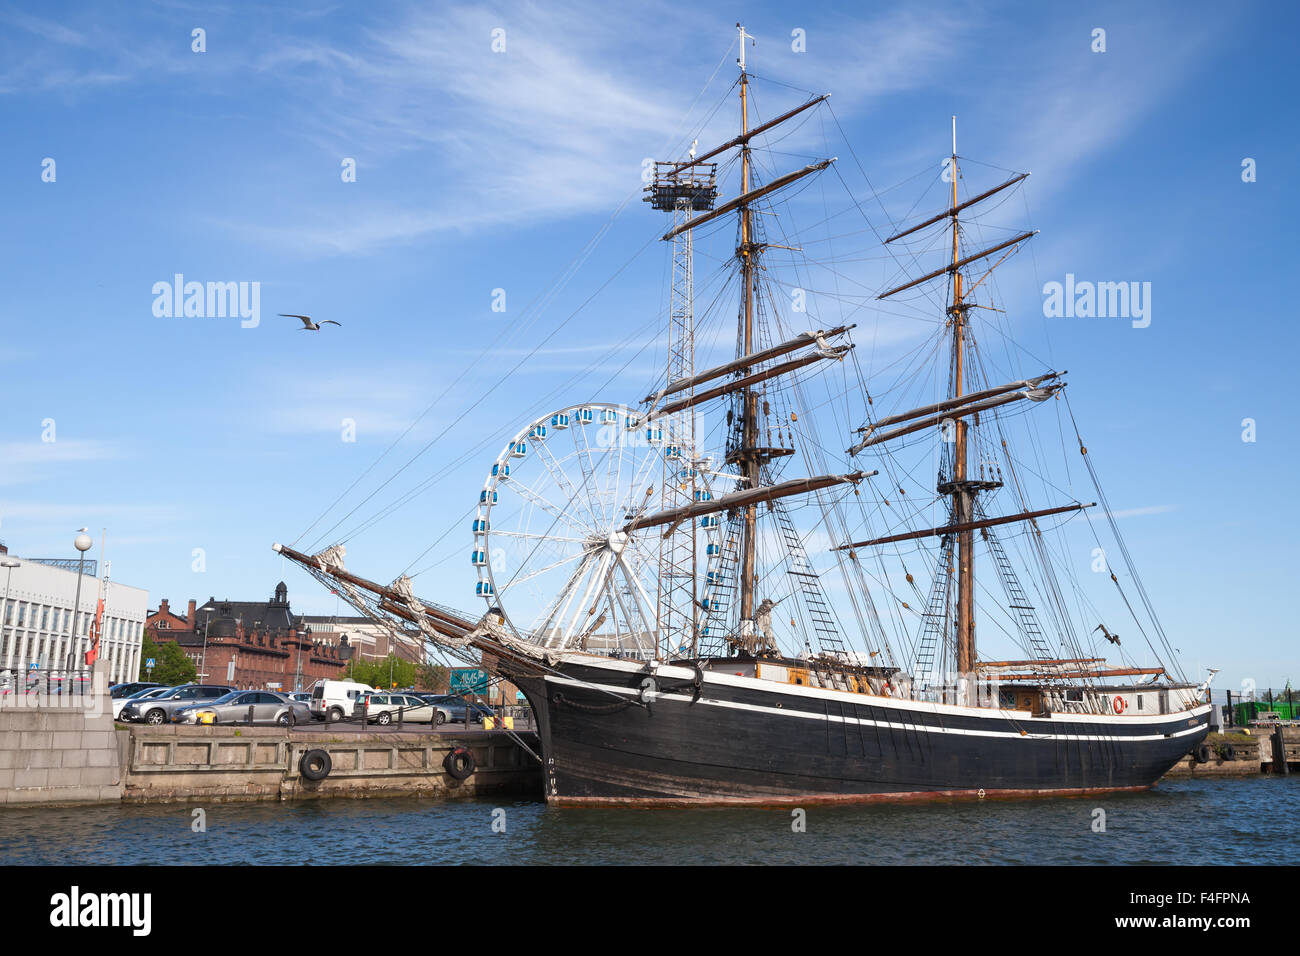 Helsinki, Finland - June 12, 2015: The brig 'Gerda' stands moored in Helsinki port , old wooden sailing ship Stock Photo